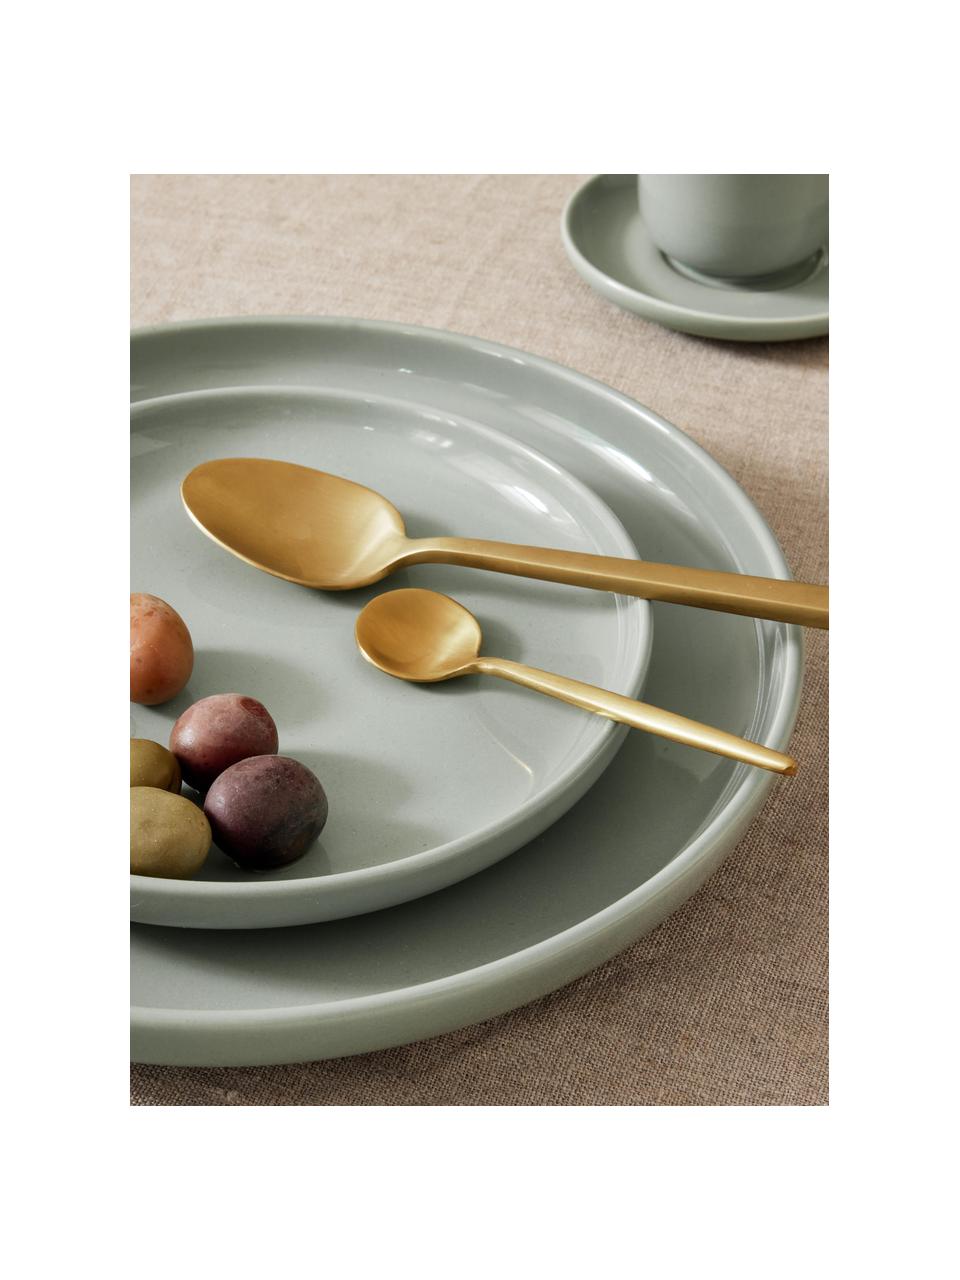 Porzellan-Frühstückteller Nessa, 4 Stück, Hochwertiges Hartporzellan, glasiert, Salbeigrün, glänzend, Ø 19 cm